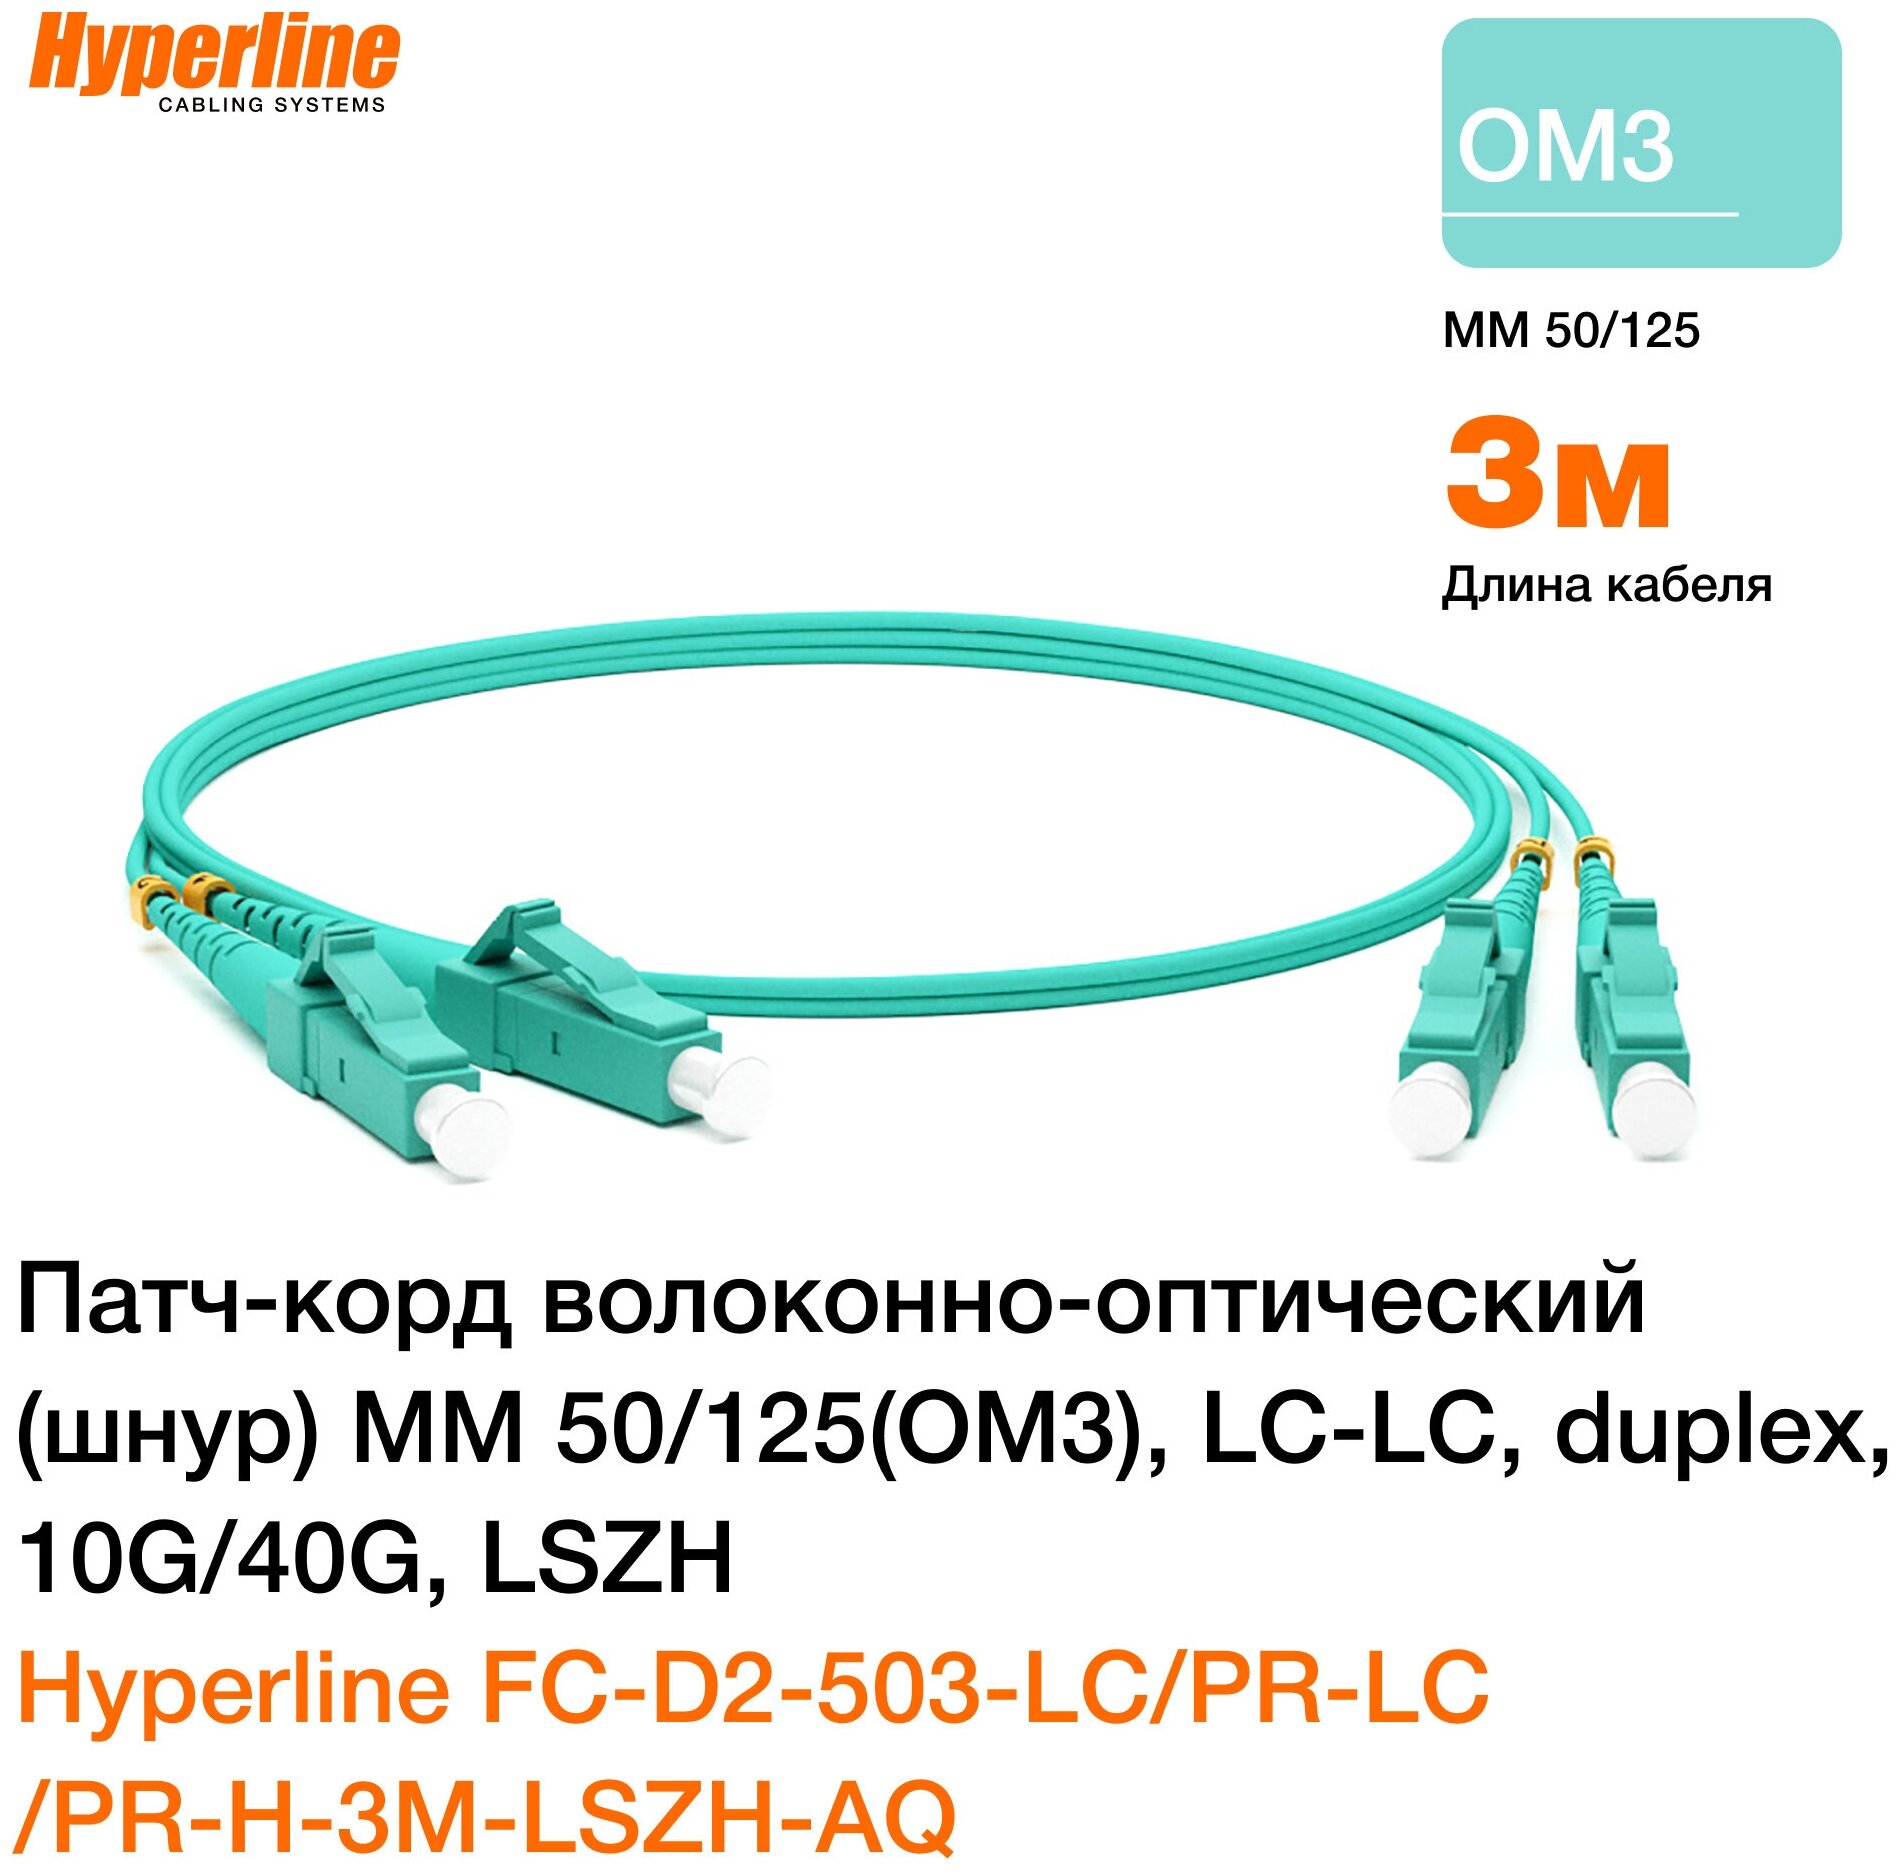 Патч-корд волоконно-оптический (шнур) MM 50/125(OM3) Hyperline LC-LC duplex 10G/40G LSZH 3 м